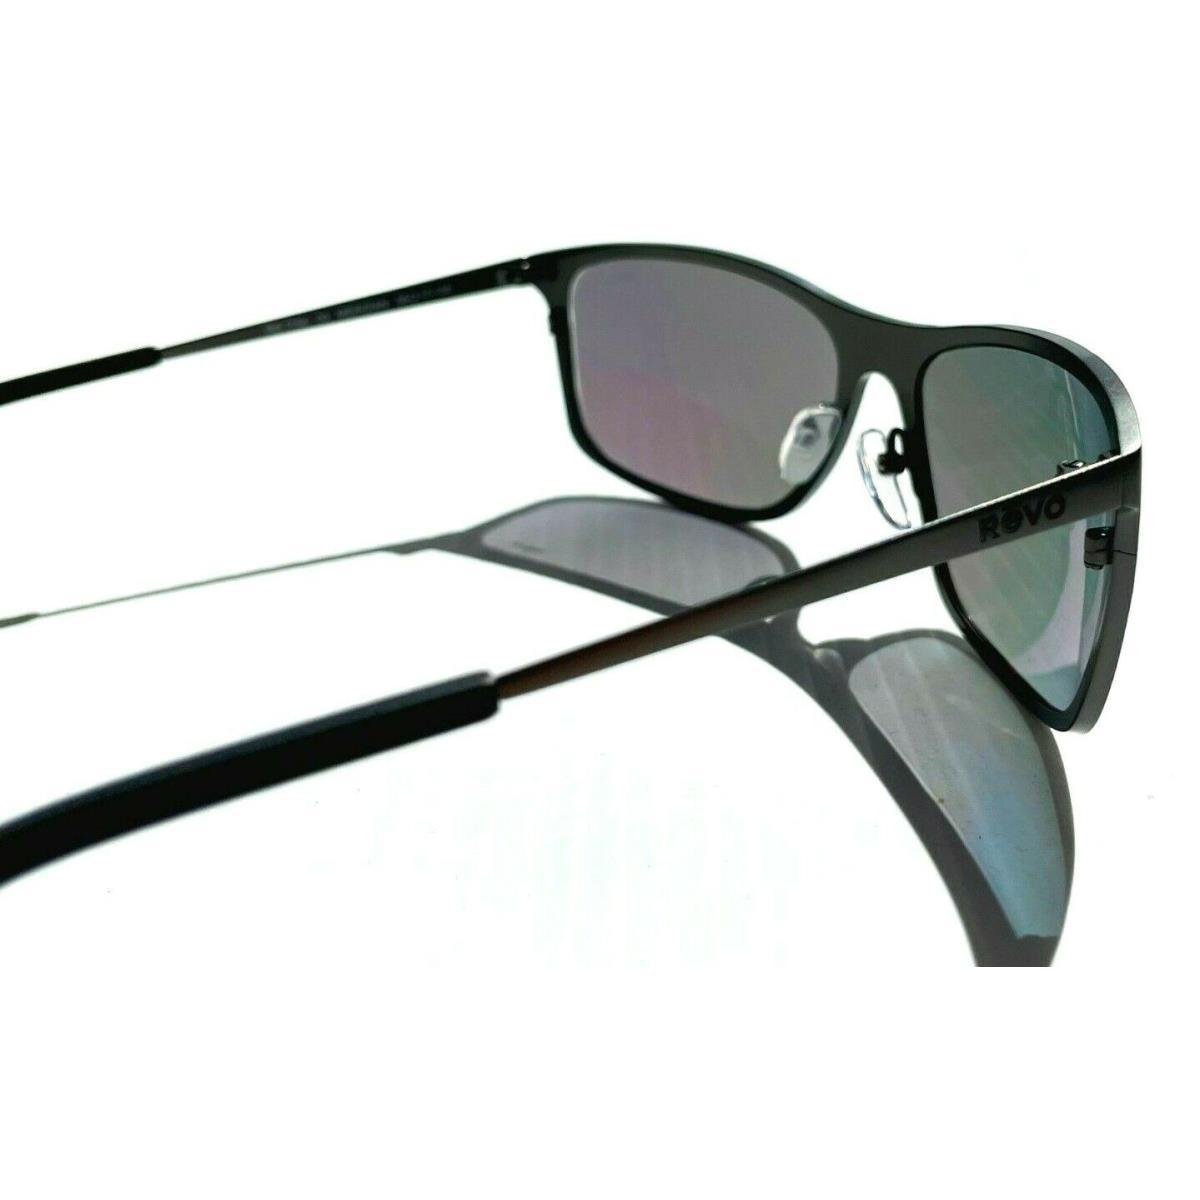 Revo sunglasses Meridian - Satin Gunmetal Frame, Grey Lens